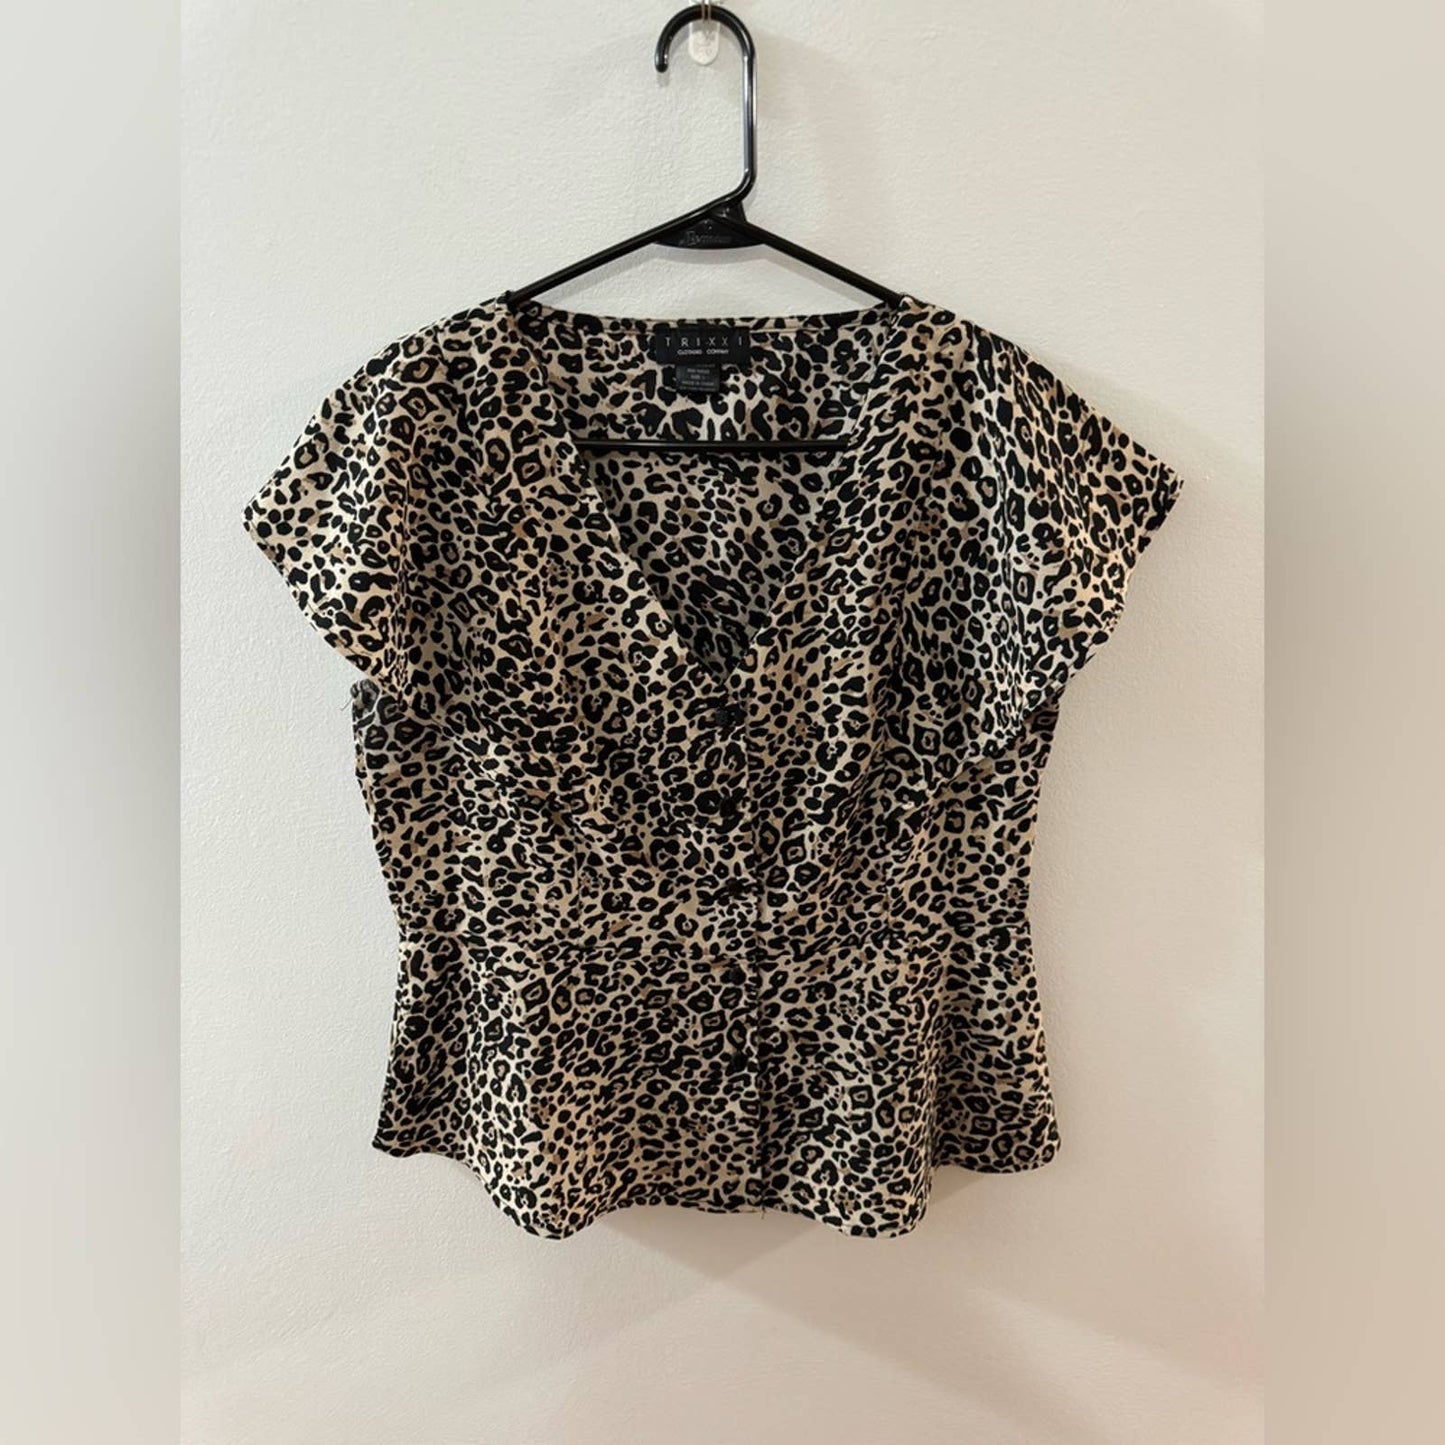 LG Trixxi Clothing Company Leopard Short Sleeve Button-Up Blouse